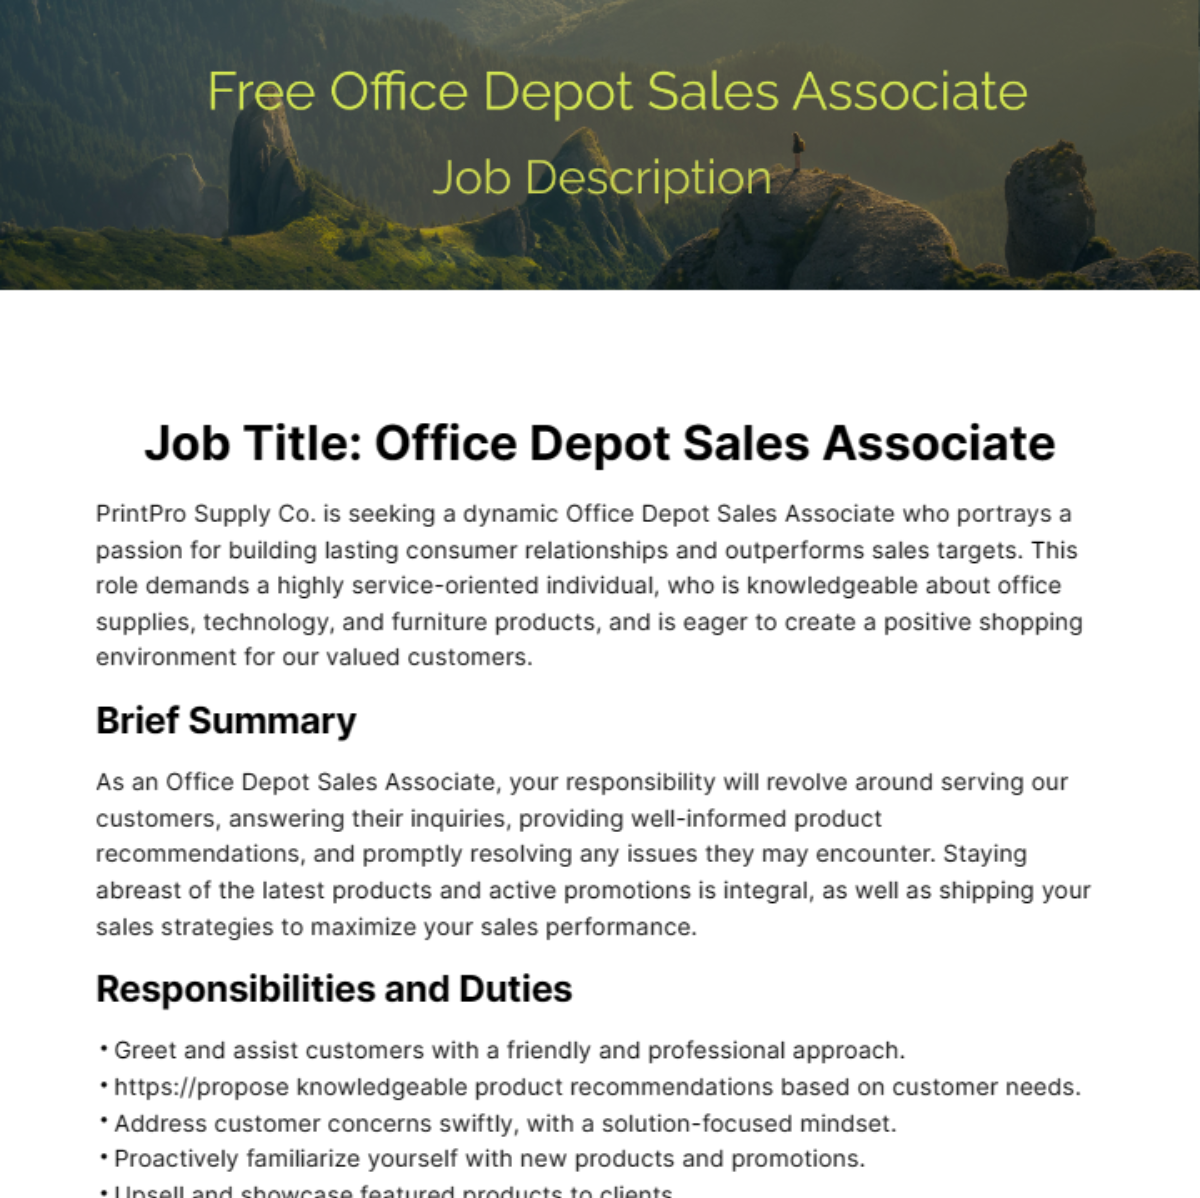 Free Office Depot Sales Associate Job Description Template